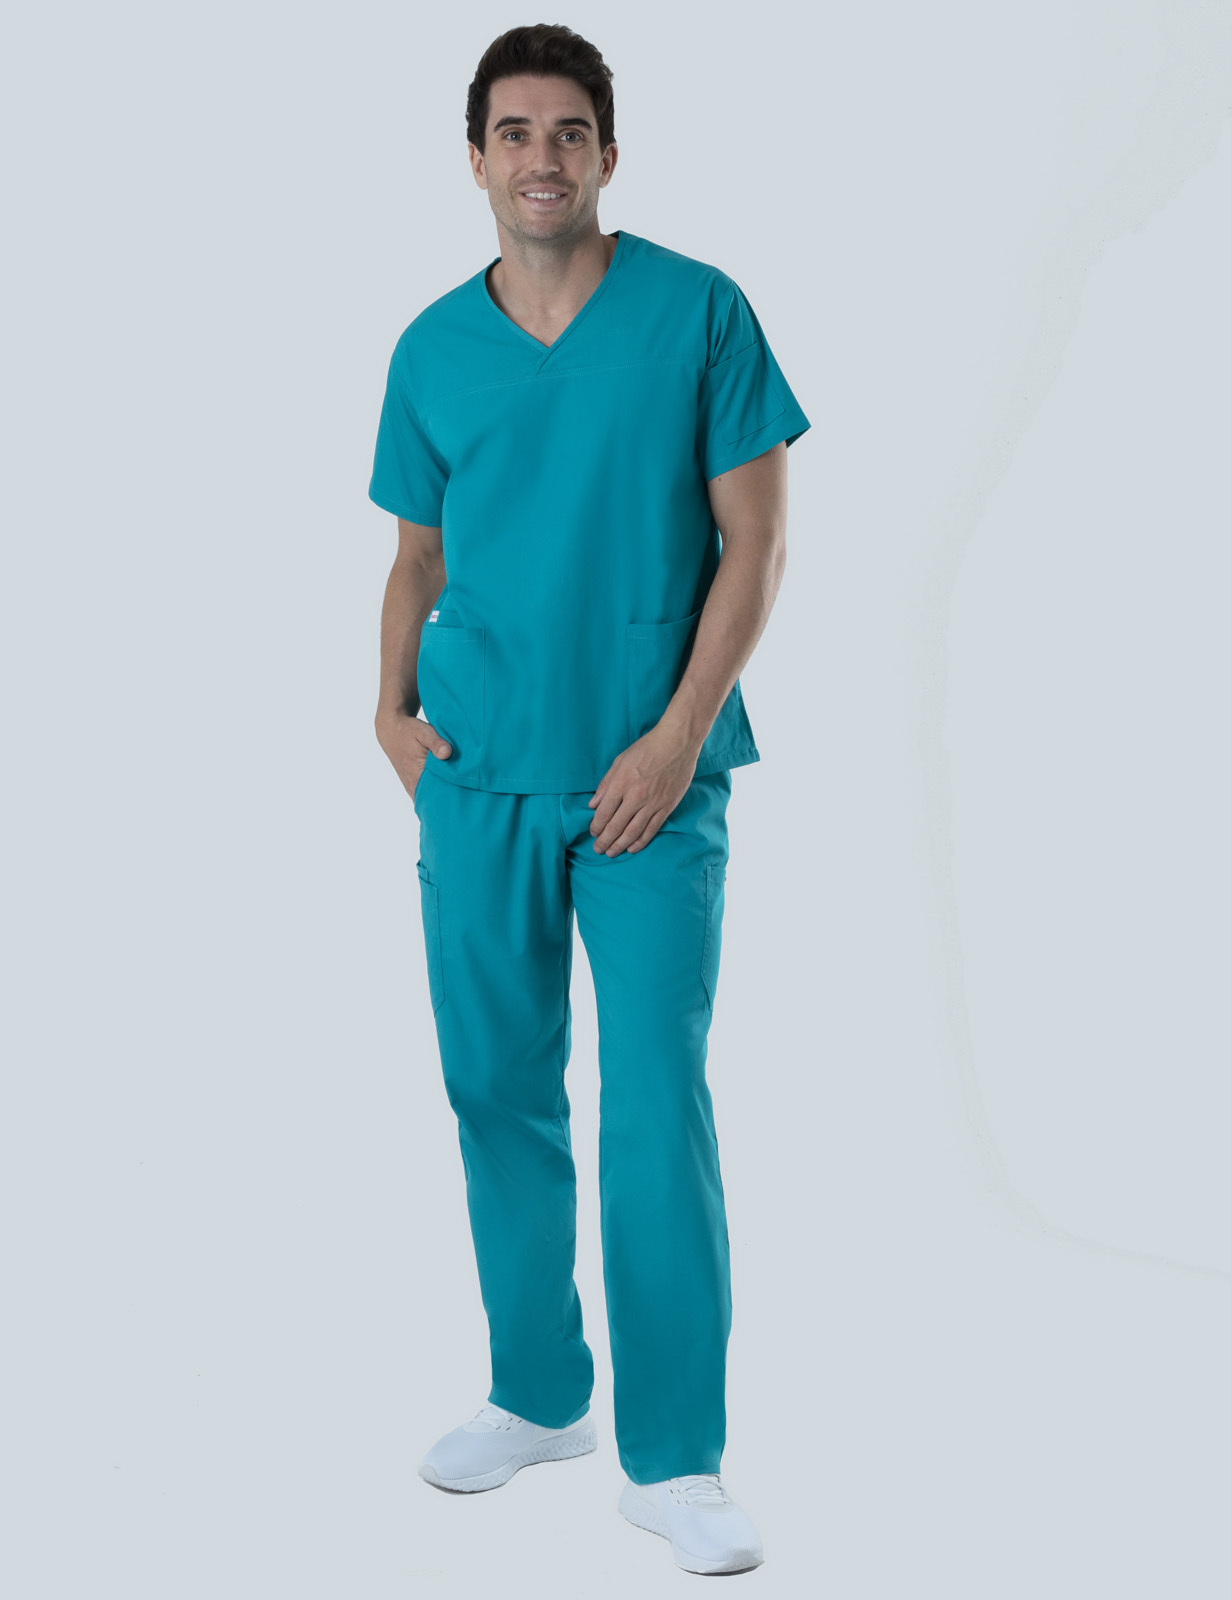 ECT Assistant in Nursing Uniform Set Bundle (Men's Fit Solid Top and Cargo Pants in Royal + Logos)